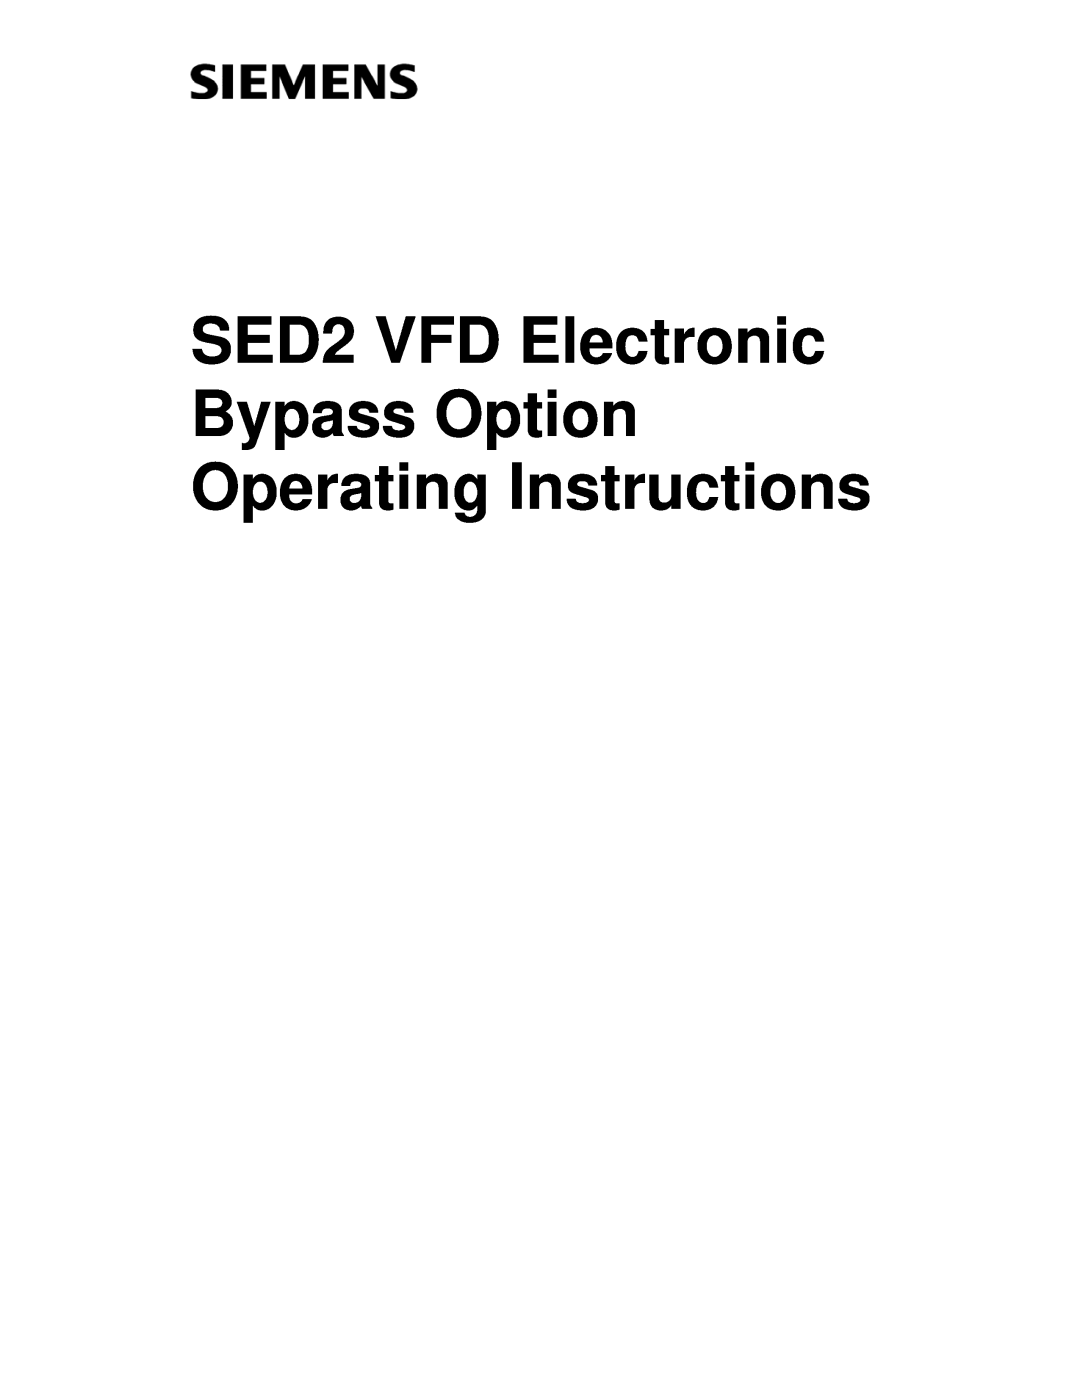 Siemens 125-3208 operating instructions SED2 VFD Electronic Bypass Option, Operating Instructions 